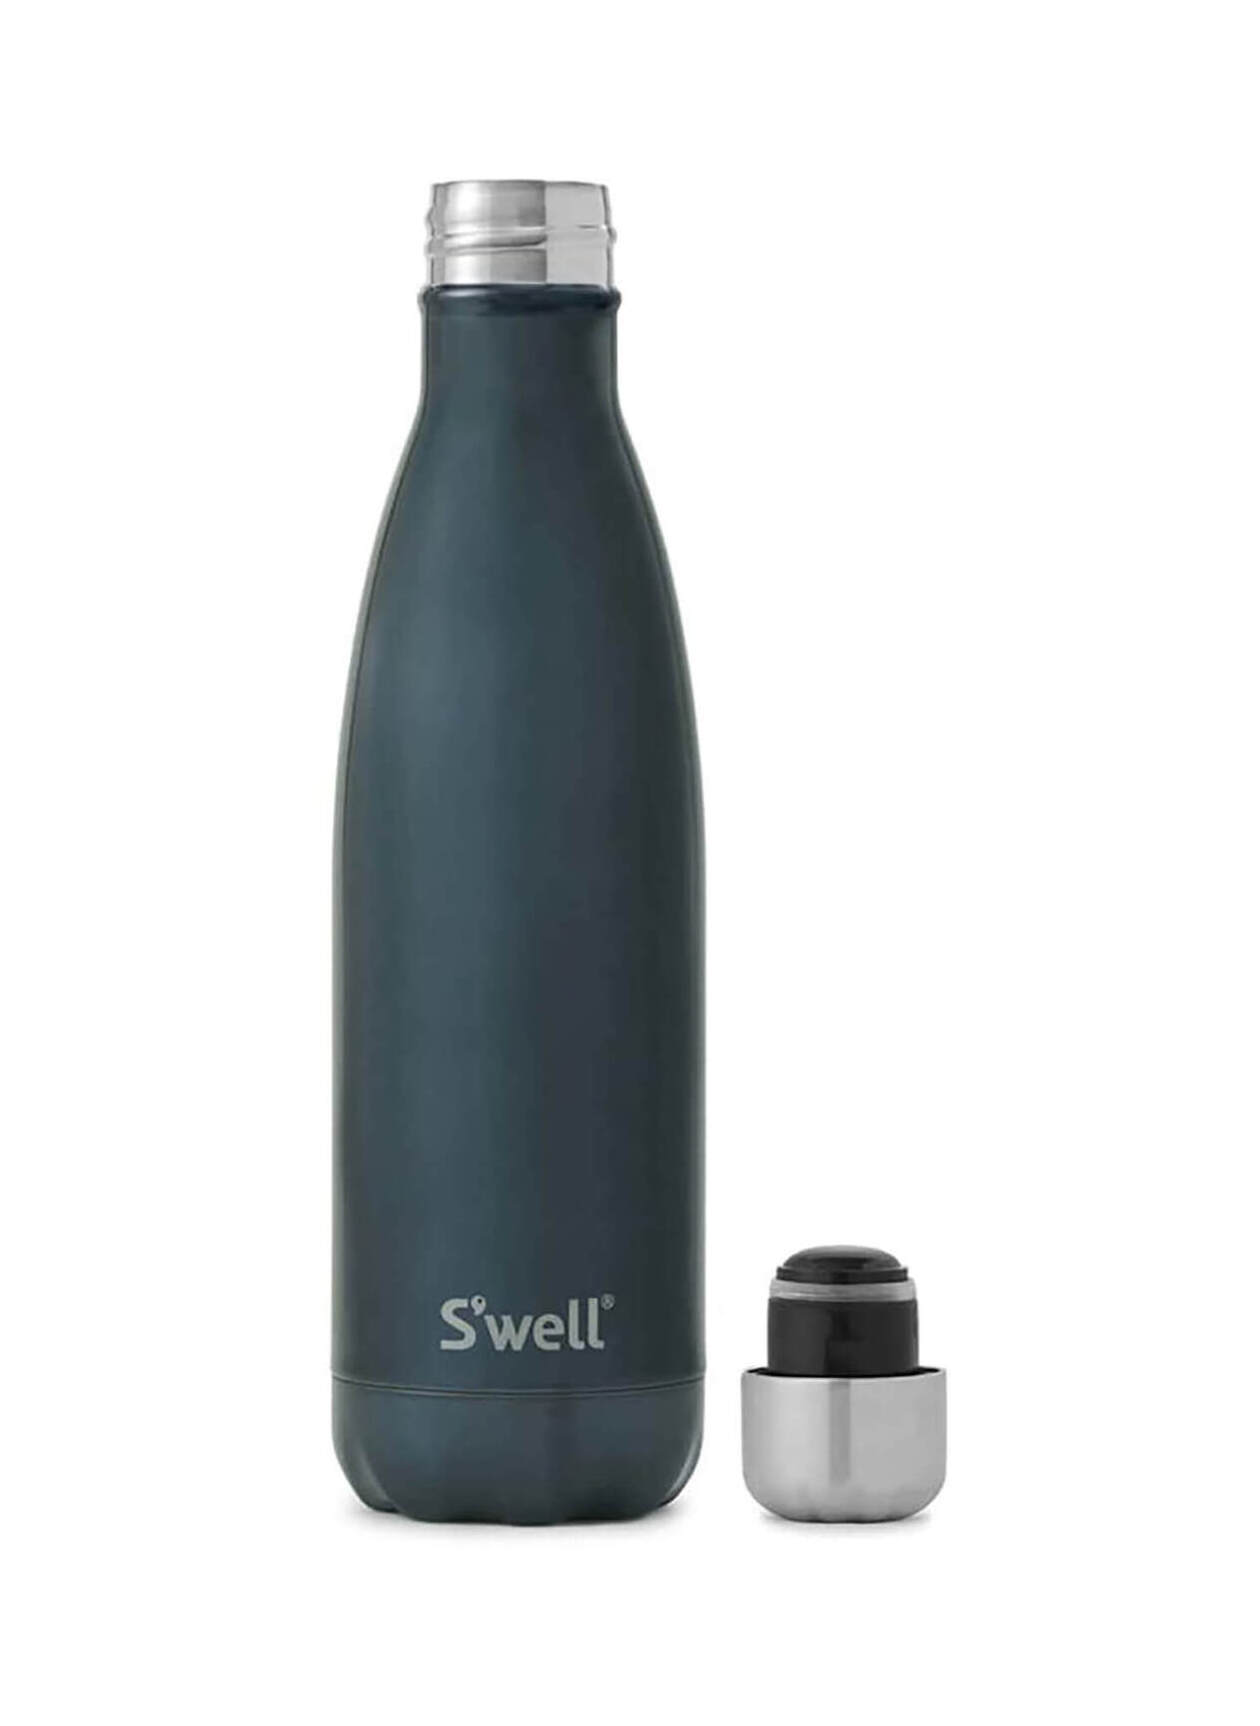 S'well Bottle, Blue Suede 17 oz Stainless Steel Water Bottle